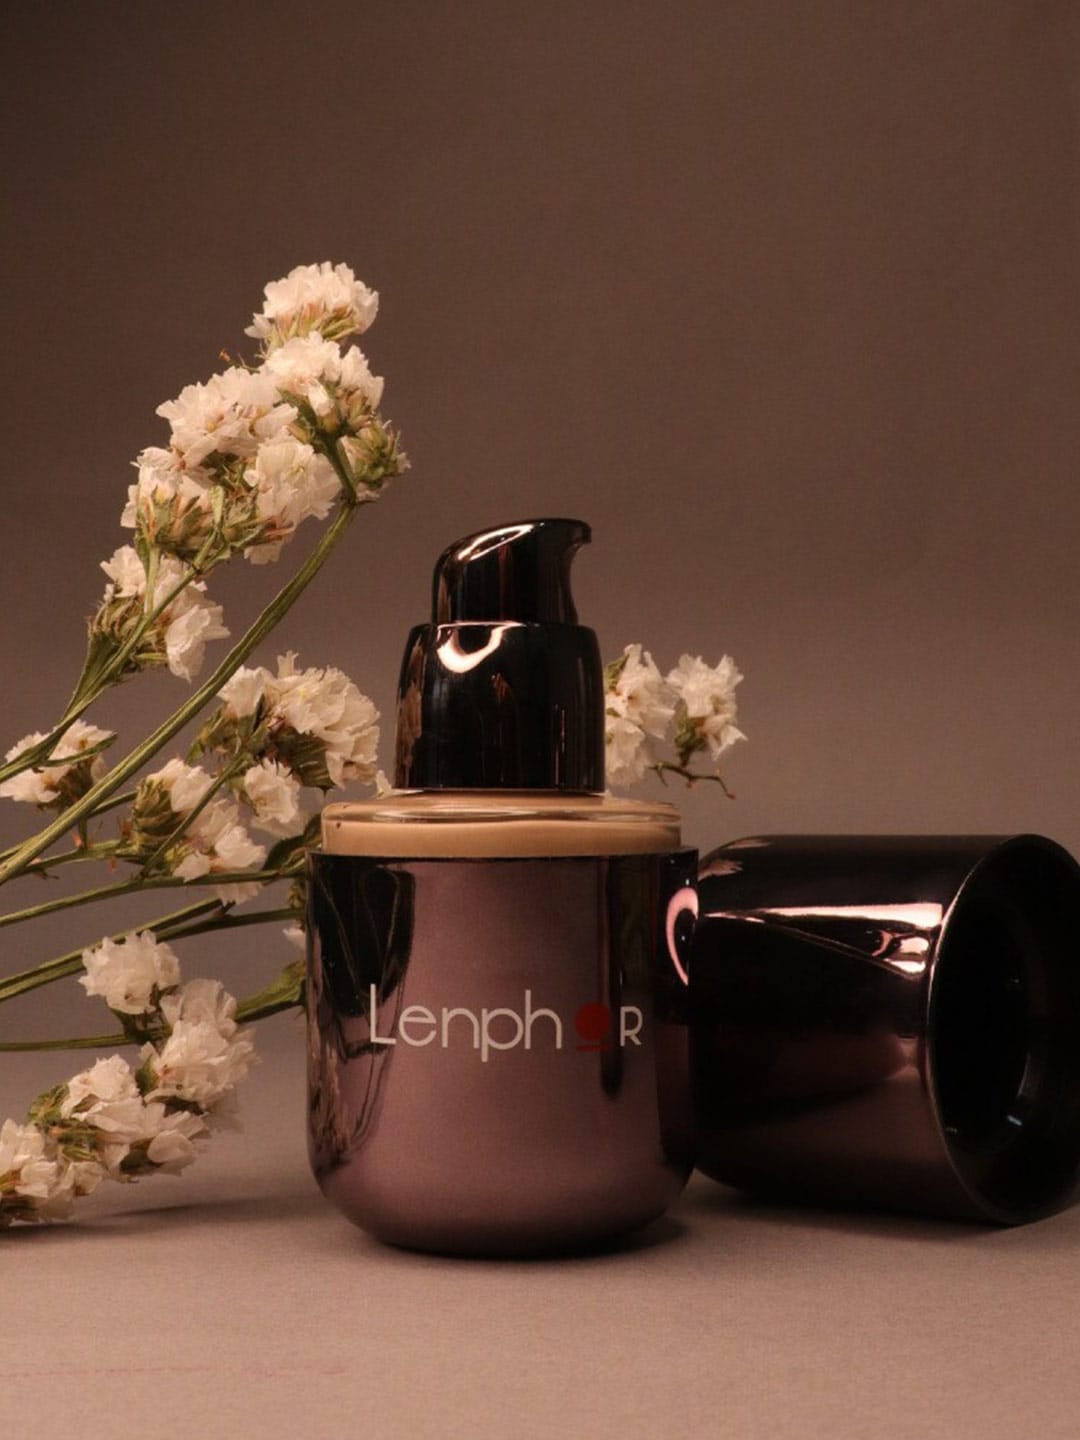 Lenphor Luminous Foundation 30 ml - Dark Brown 05 Price in India